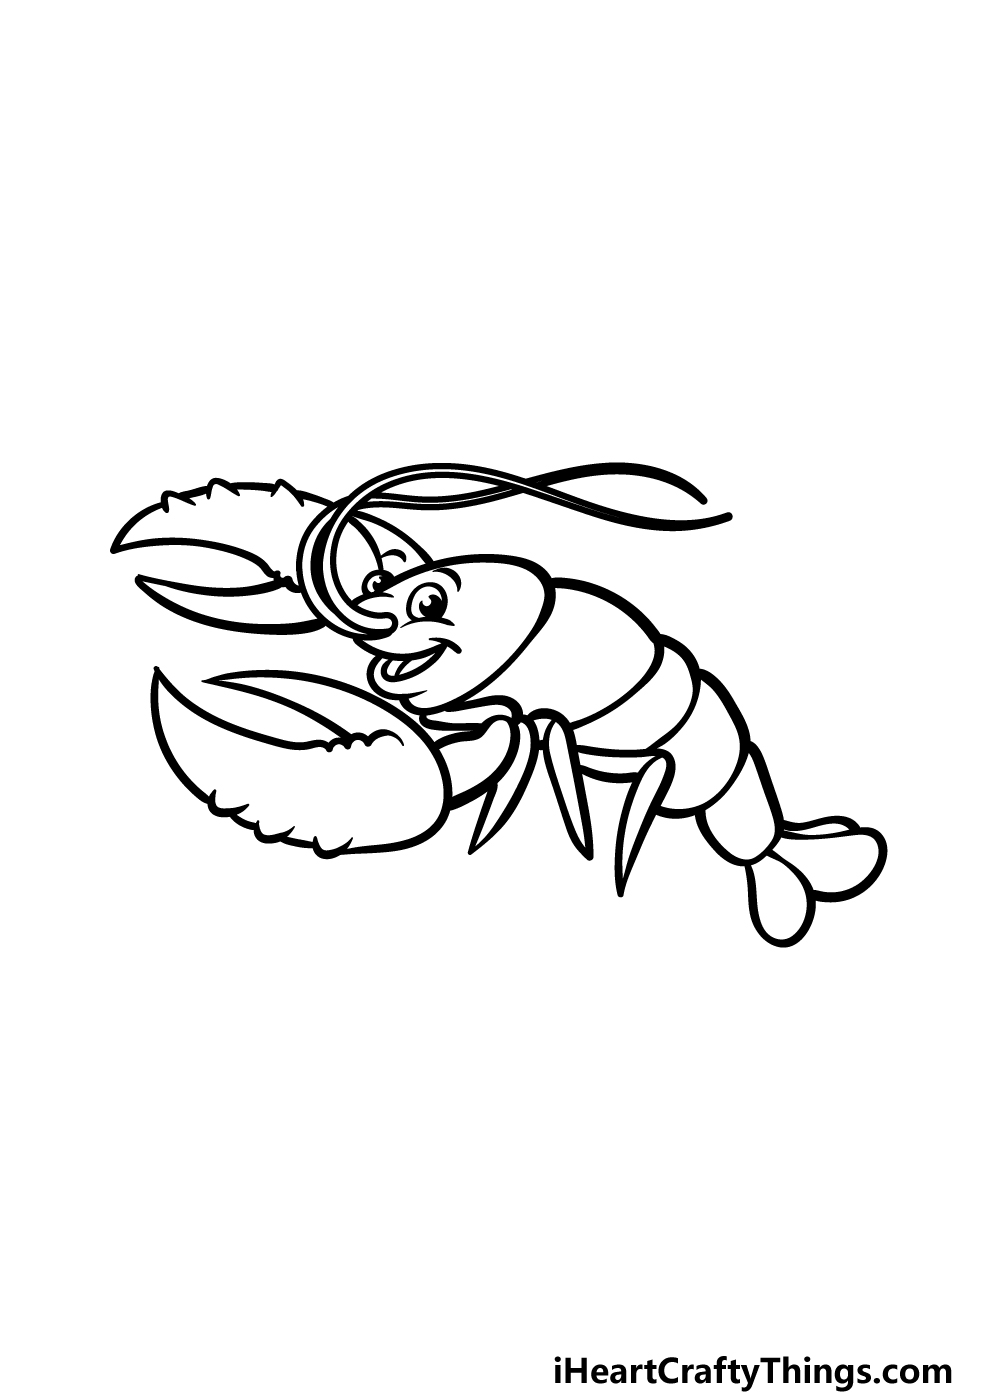 Cartoon lobster drawing